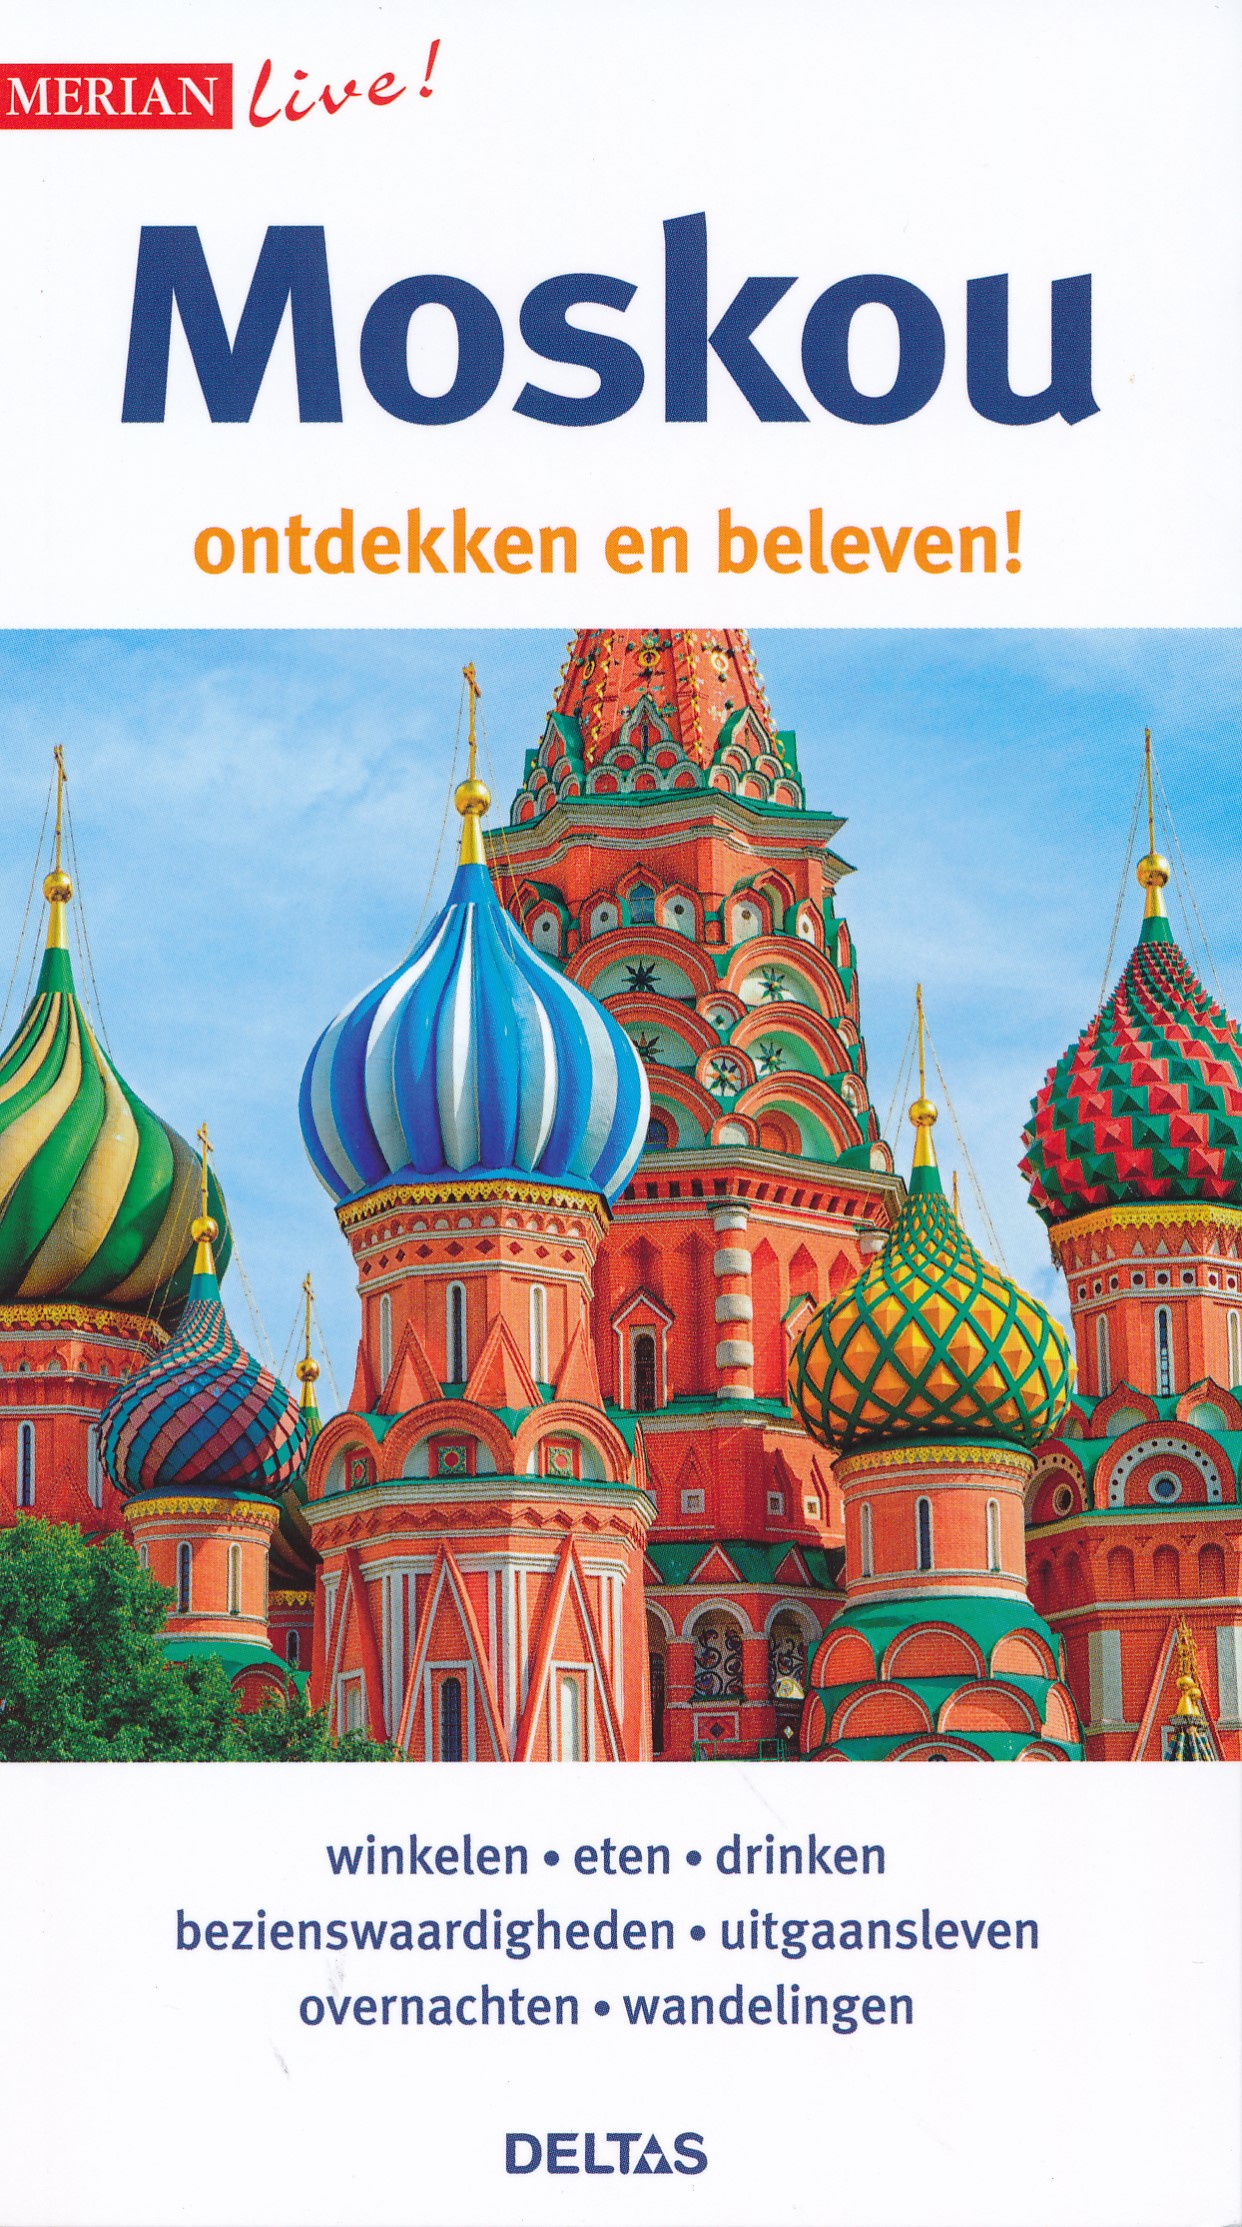 Online bestellen: Reisgids Merian live Moskou | Deltas